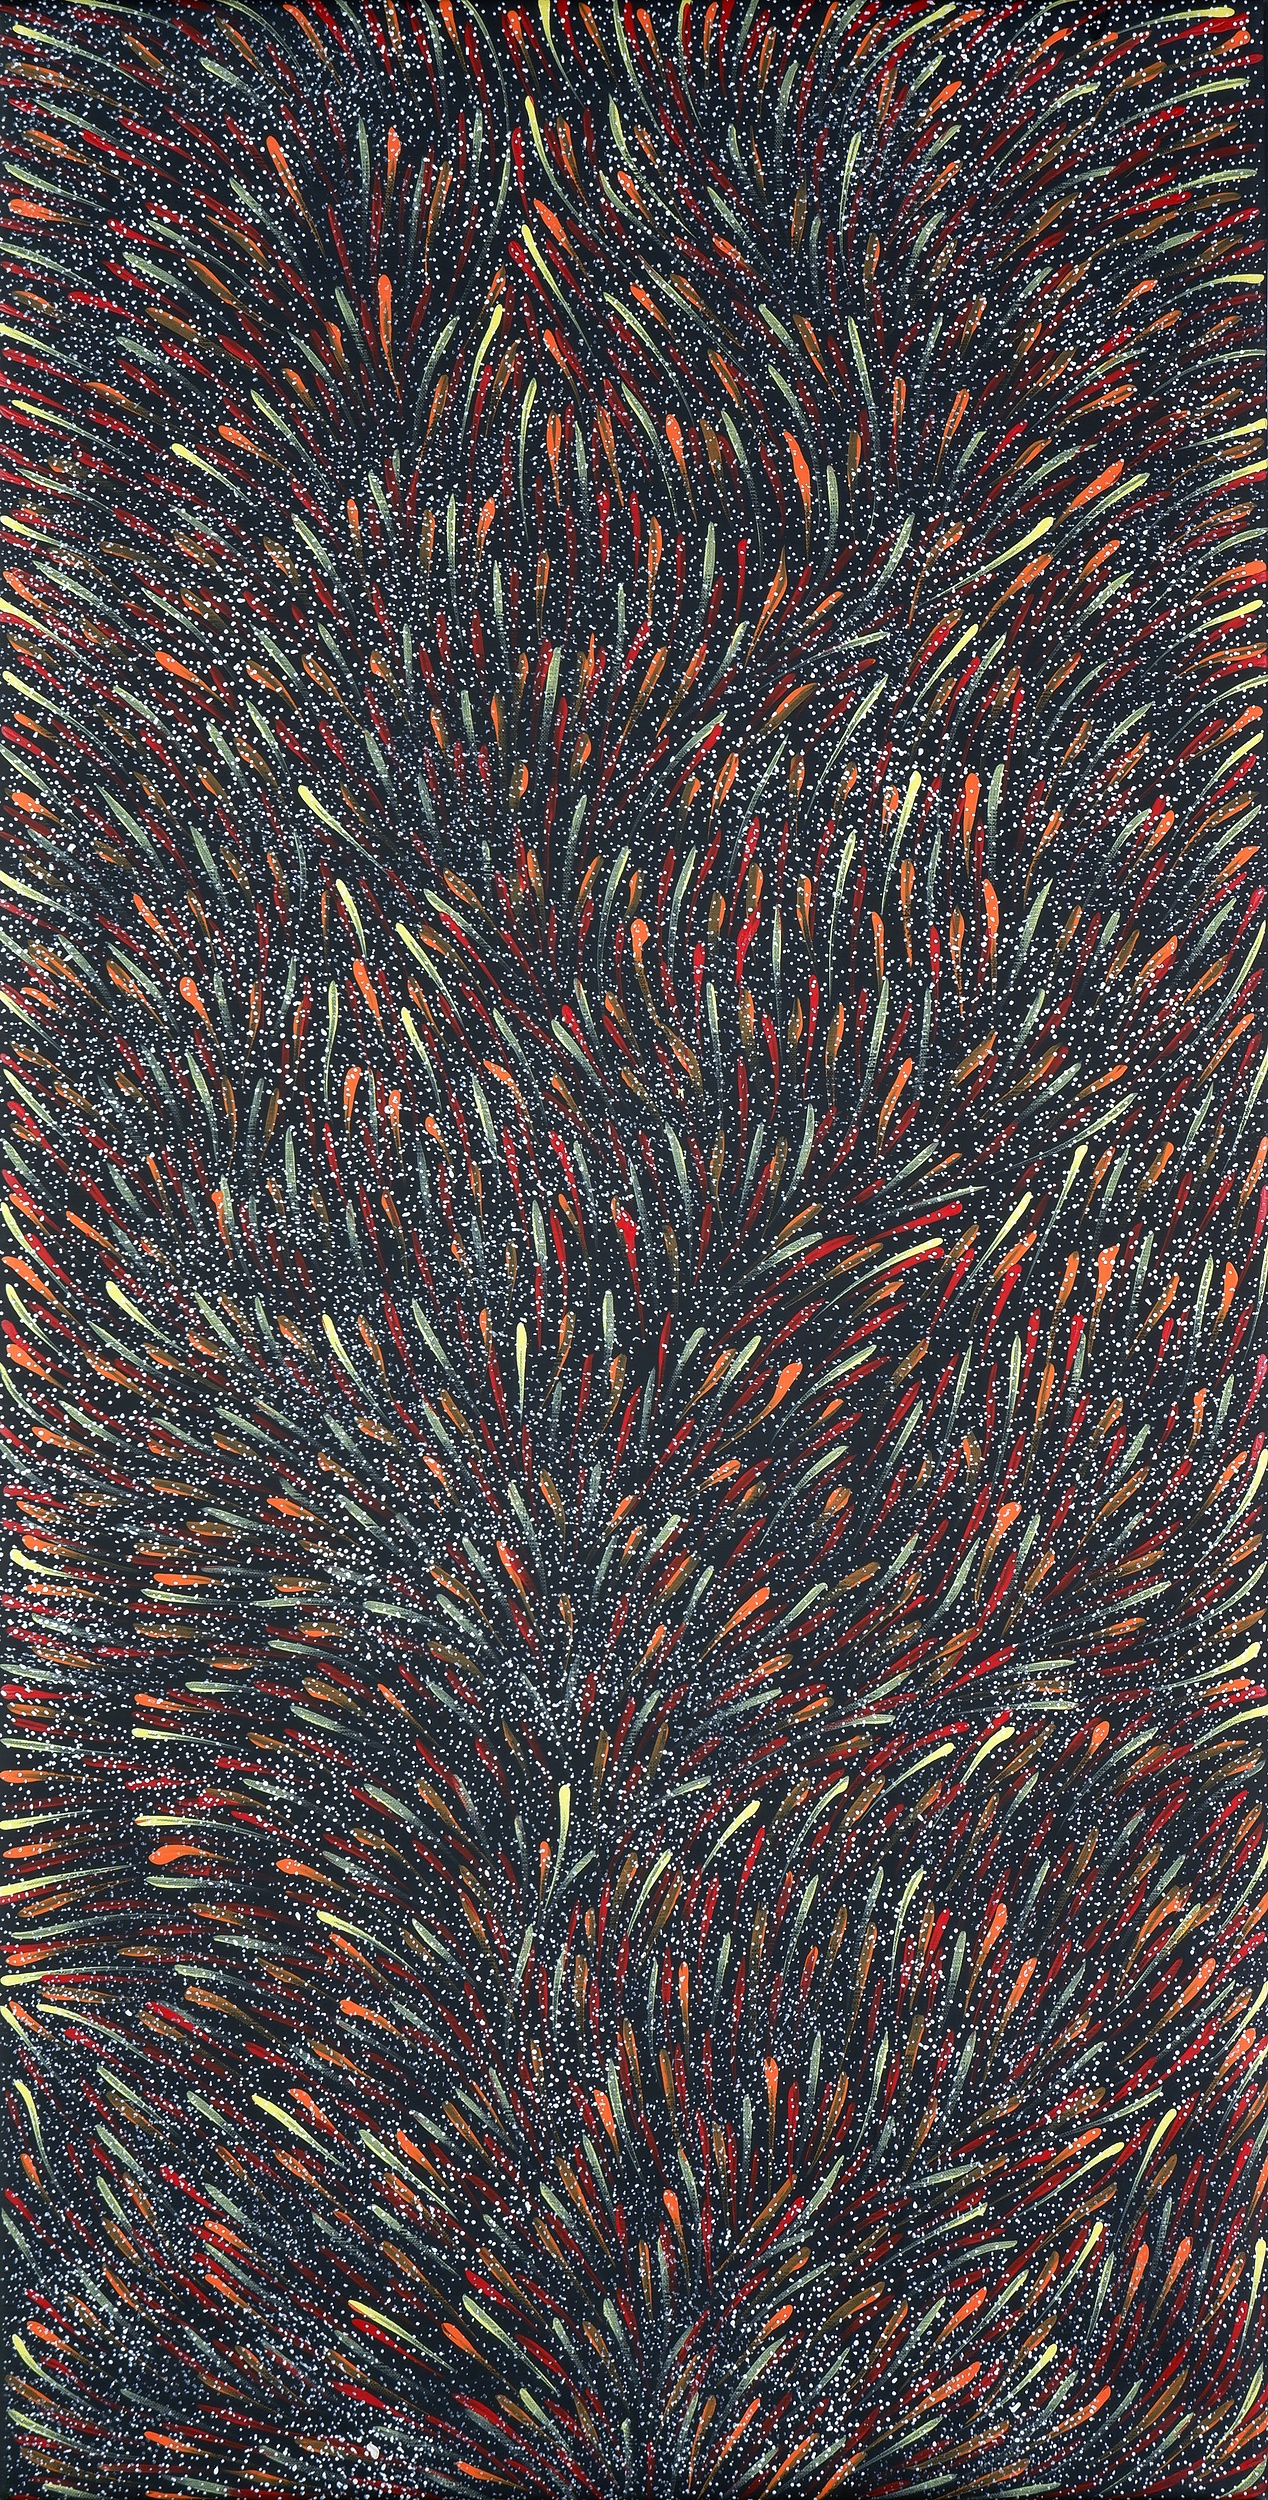 'Gracie Morton Pwerle (c1956), Bush Yam Leaves 2018, Synthetic Polymer Paint on Canvas, 120 x 61 cm'